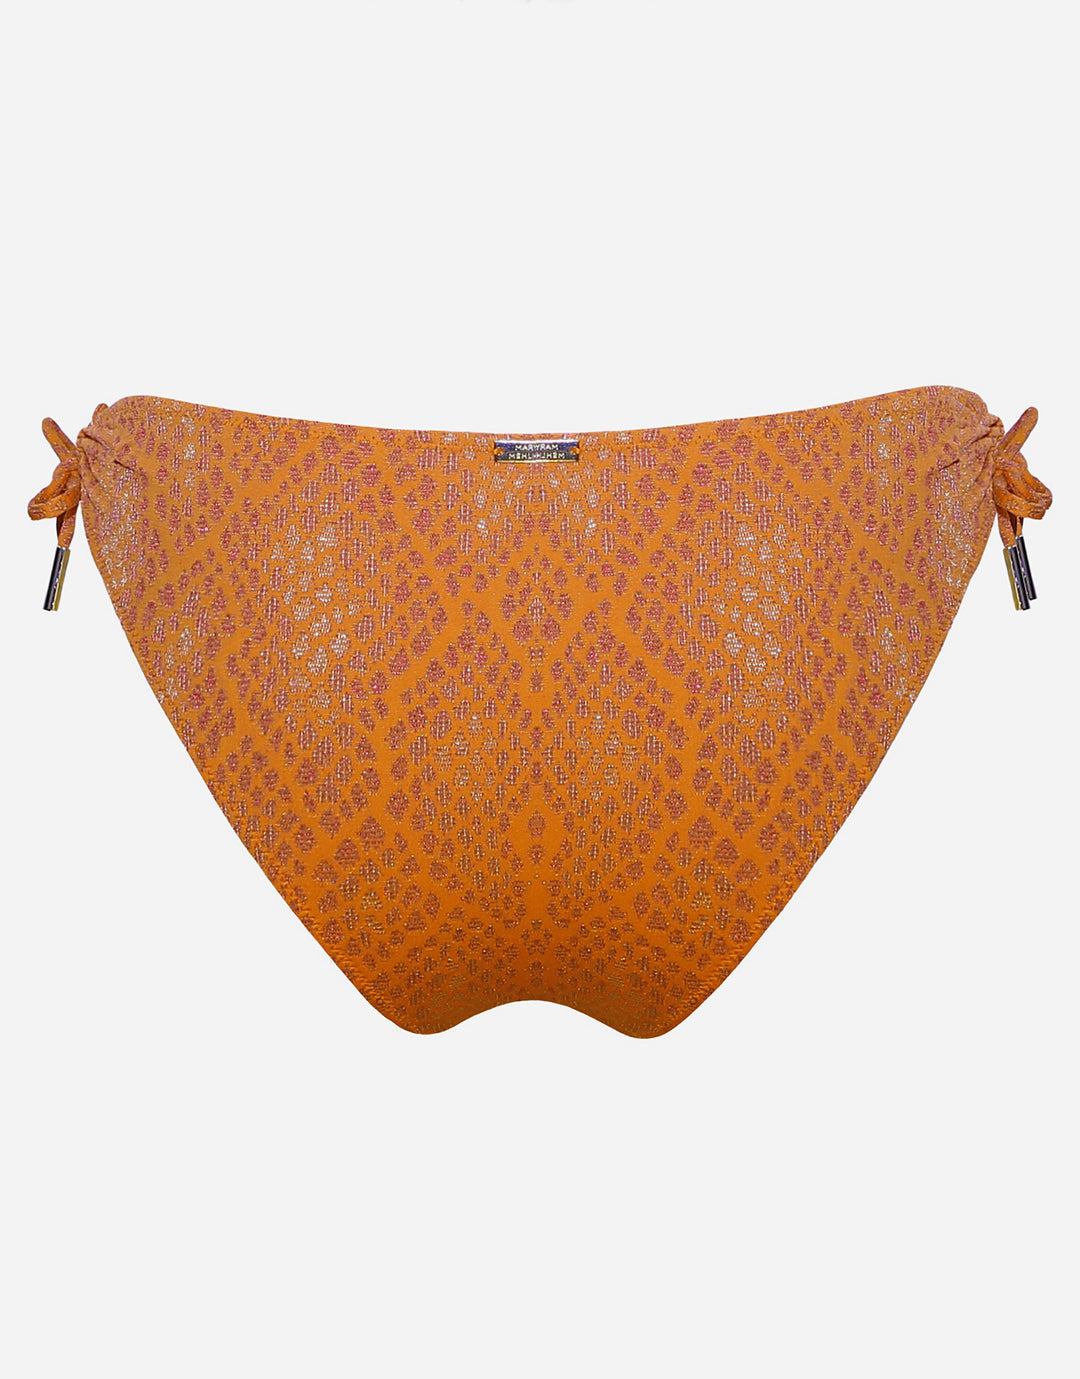 Glance Bikini Pant - Metallic Apricot - Simply Beach UK